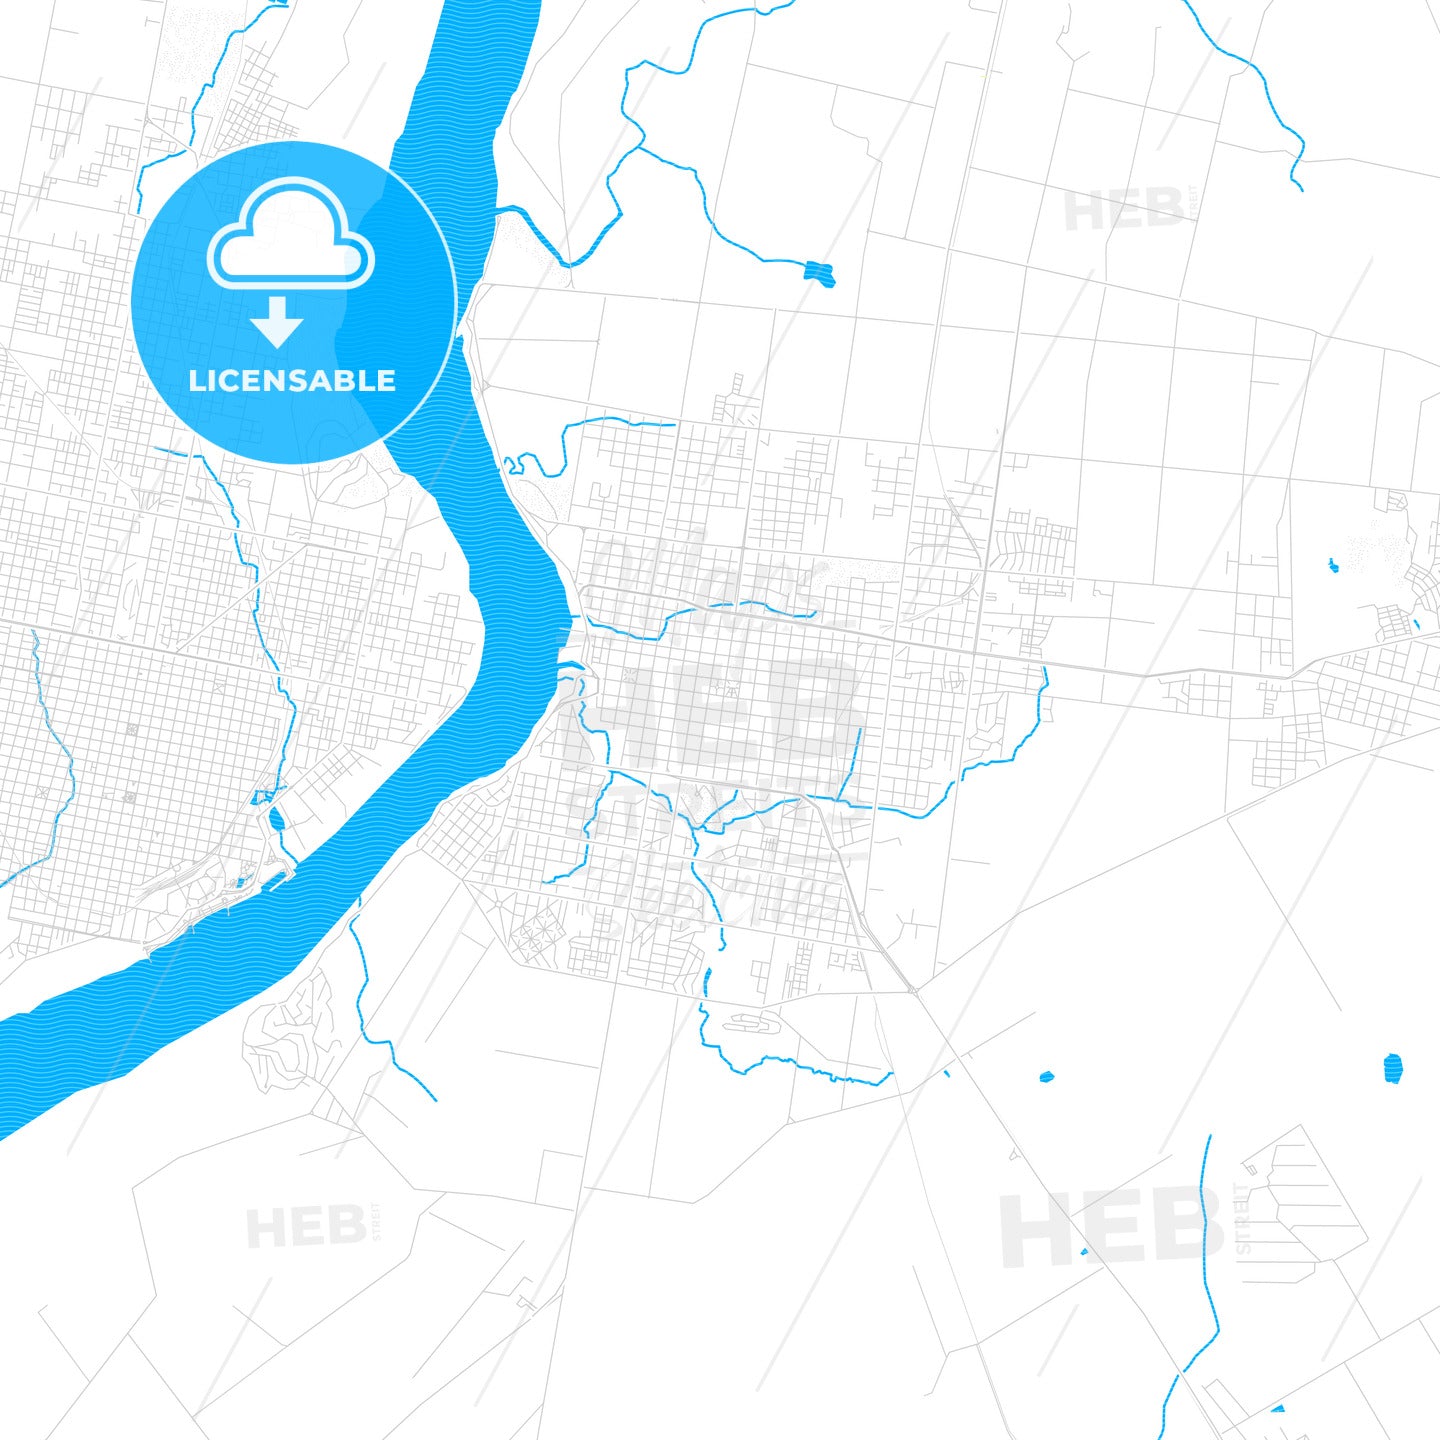 Salto, Uruguay PDF vector map with water in focus